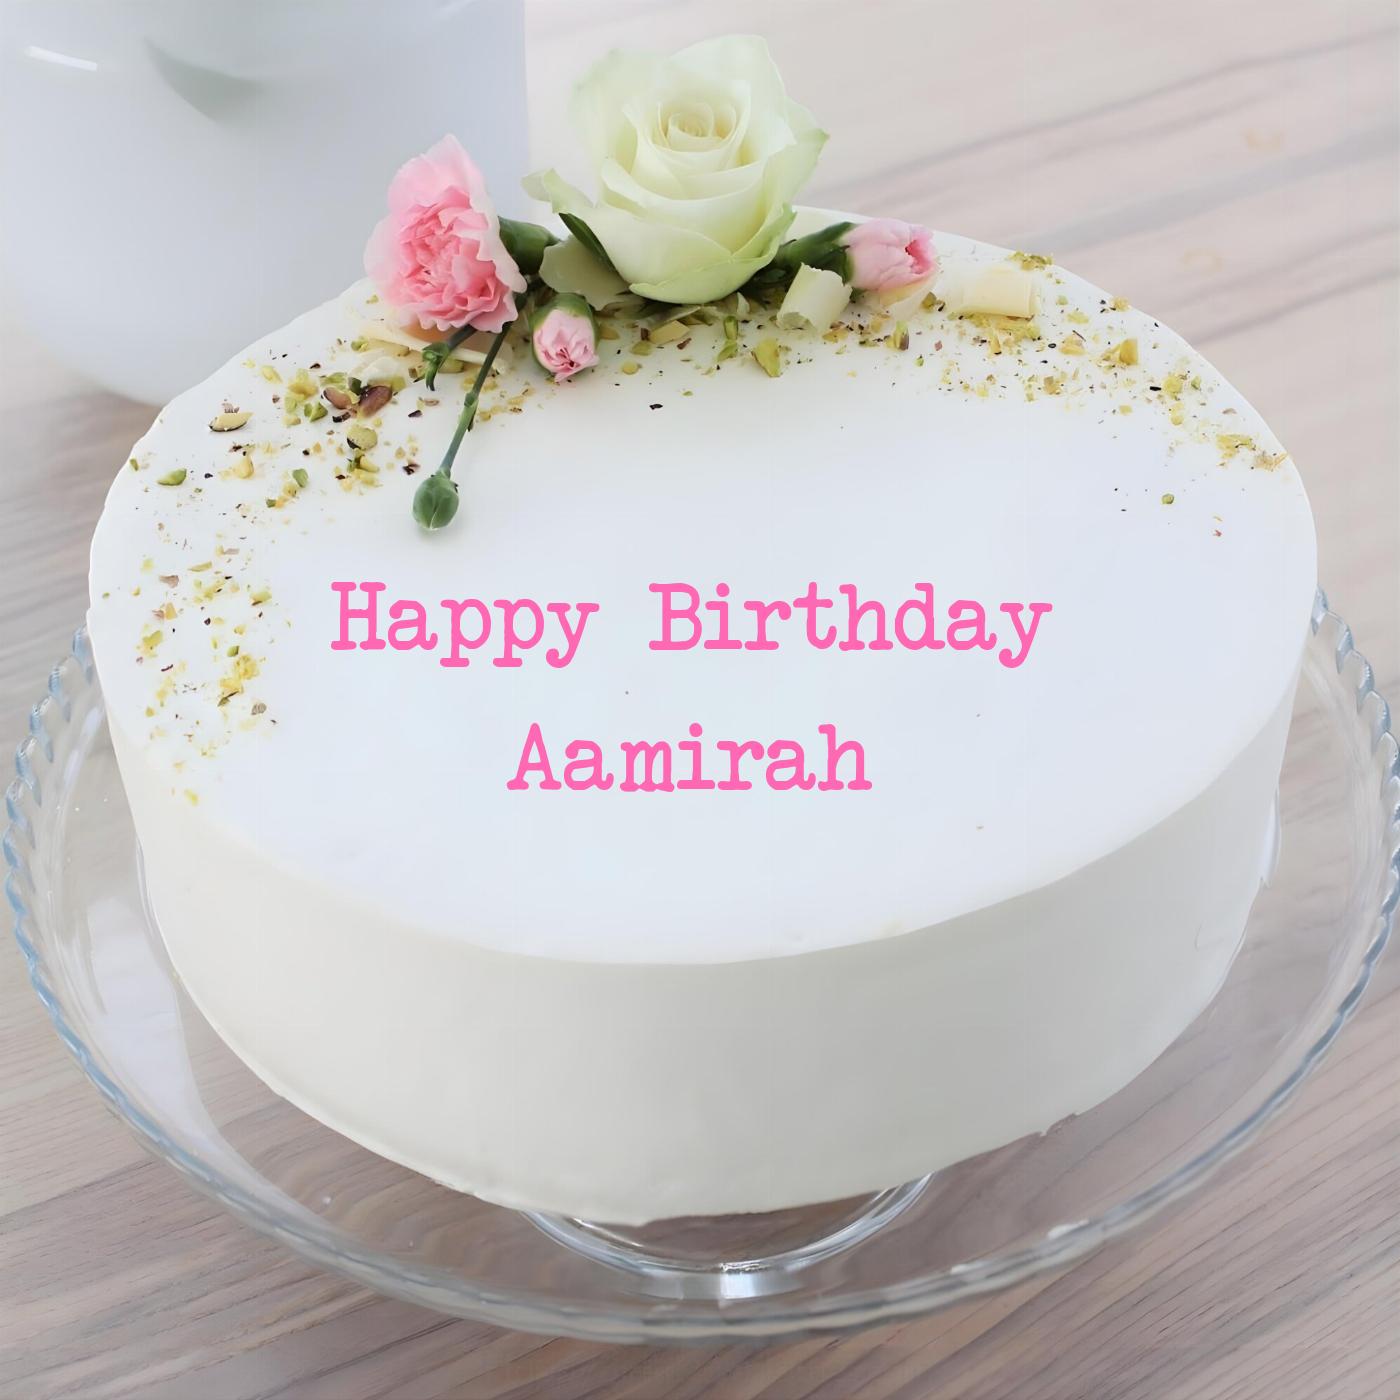 Happy Birthday Aamirah White Pink Roses Cake